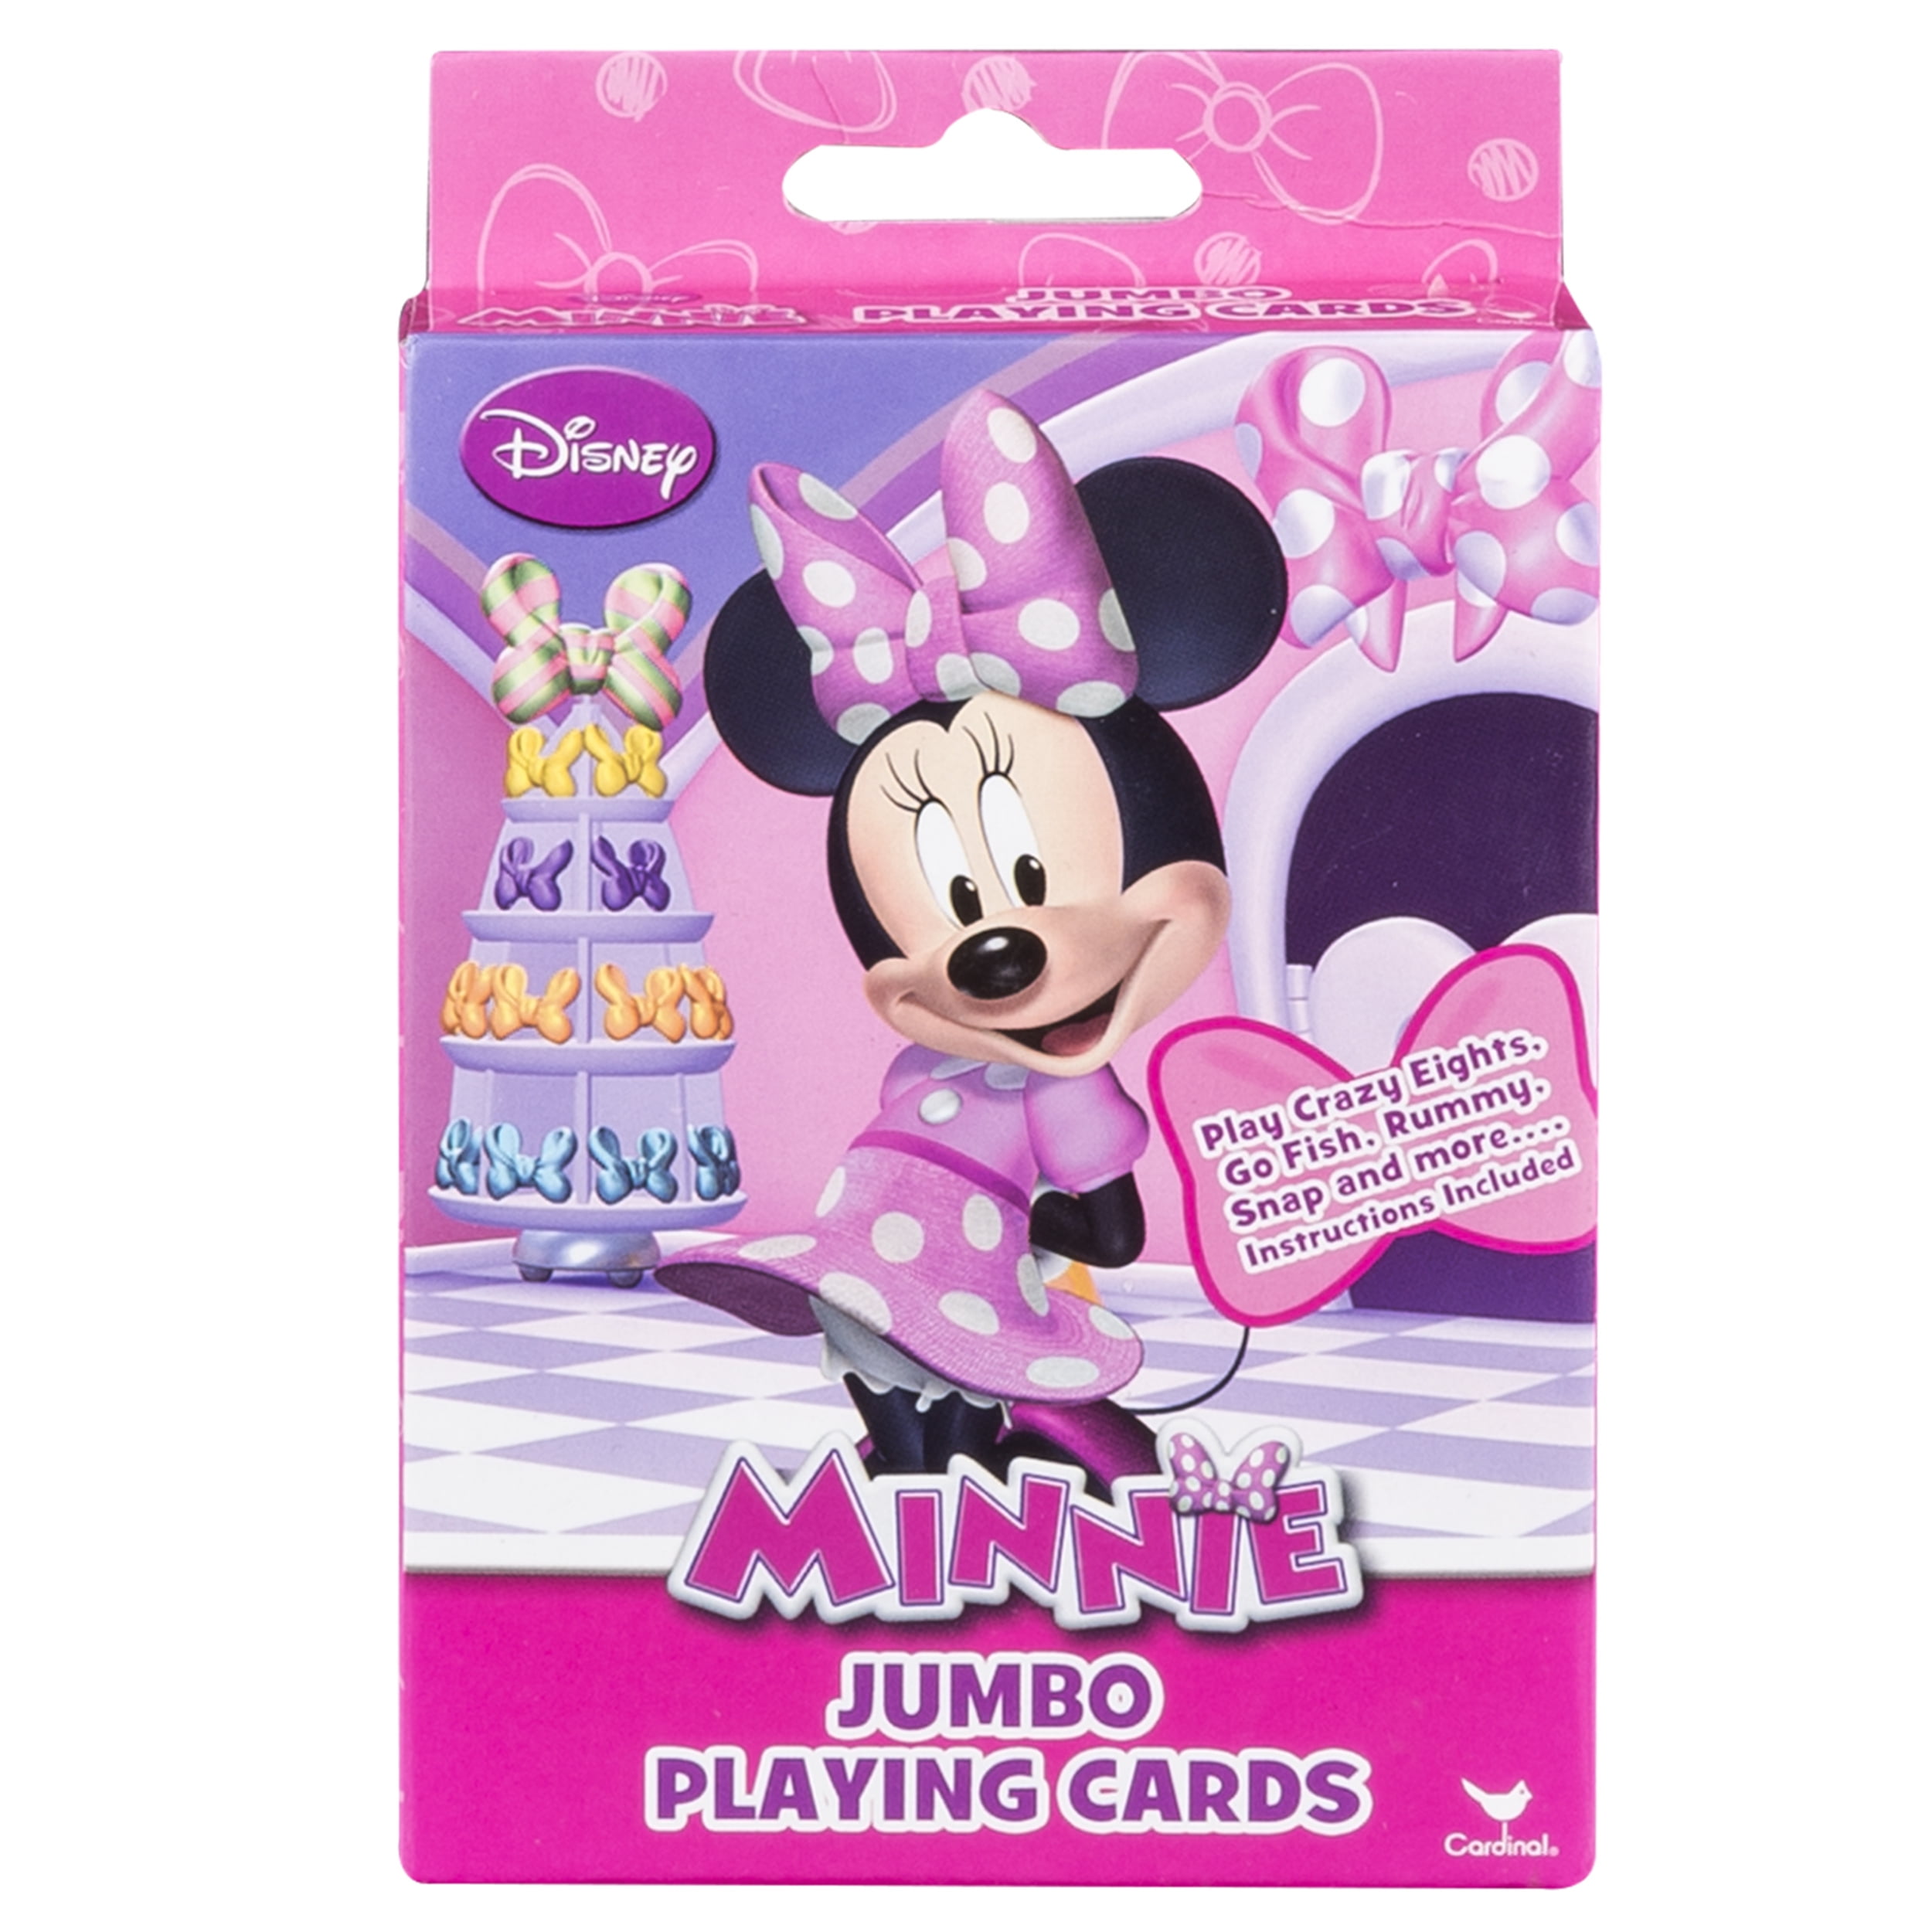 Disney Junior Minnie Jumbo Deck of Playing Cards for Kids Cardinal Brand 54 pcs 